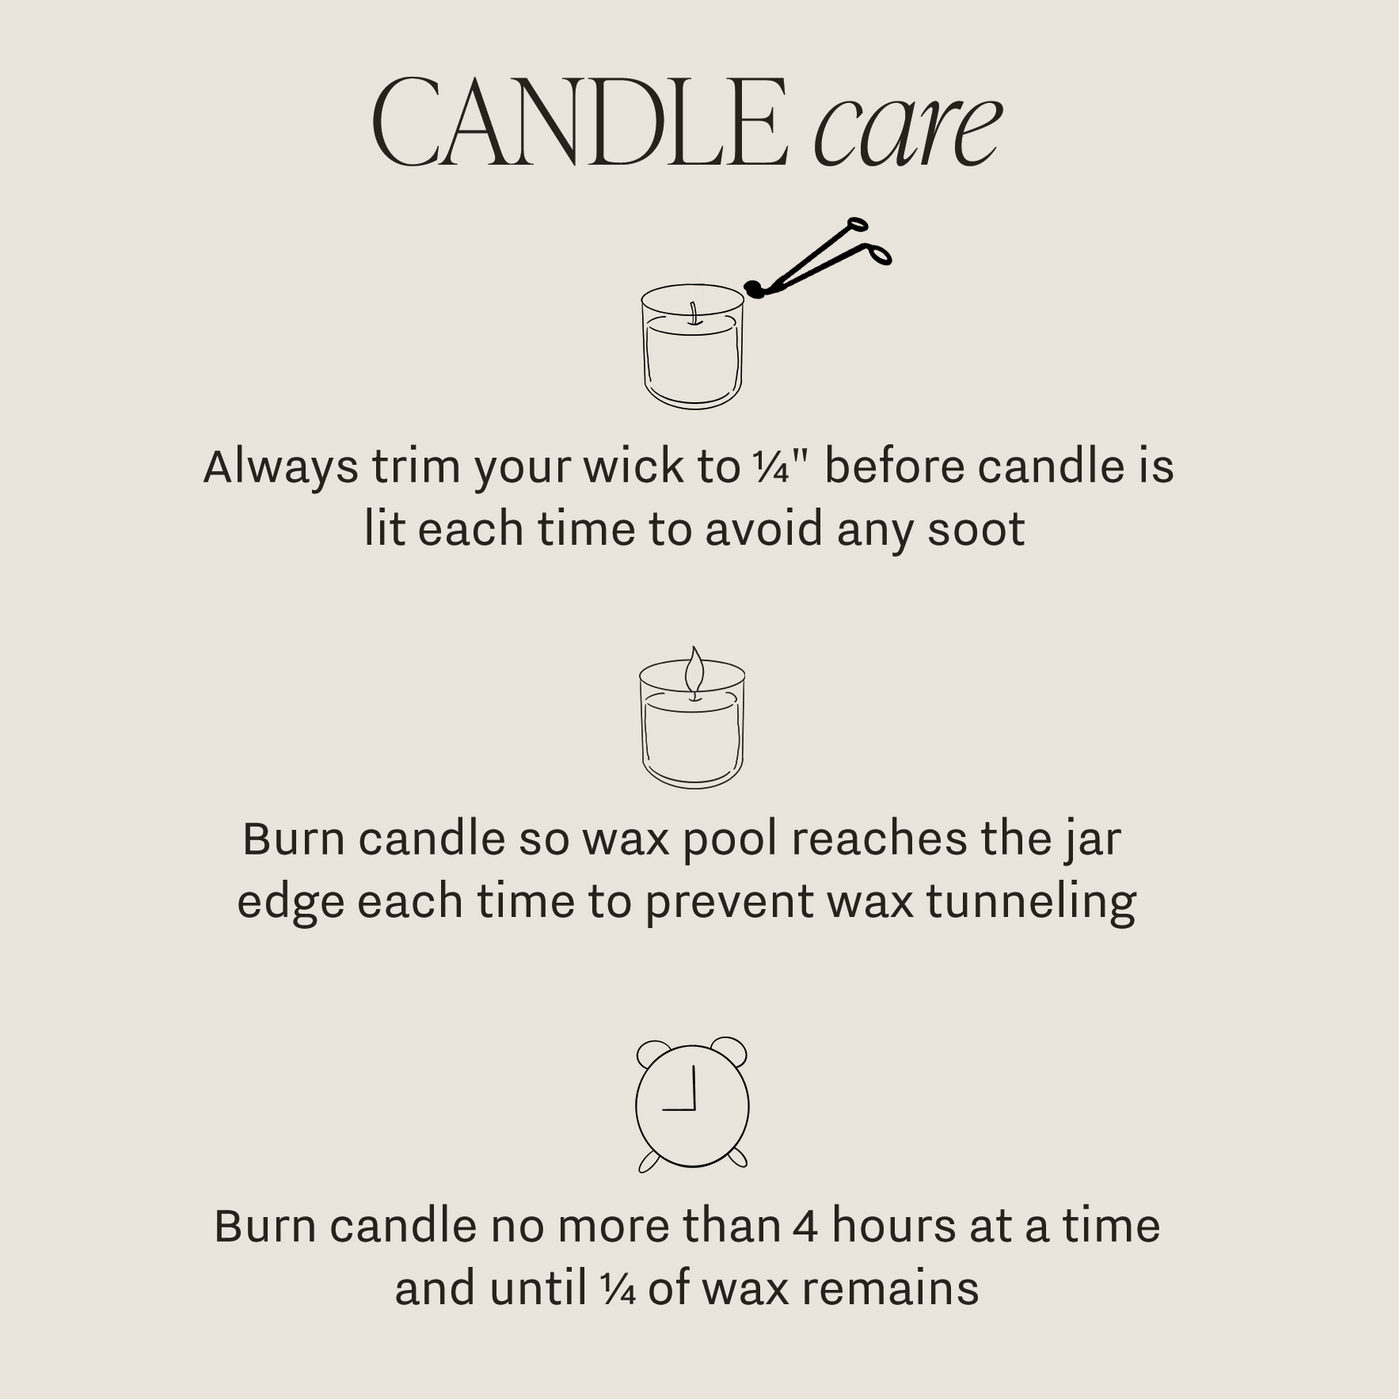 Relaxation Soy Candle - Cream Stoneware Jar - 12 oz